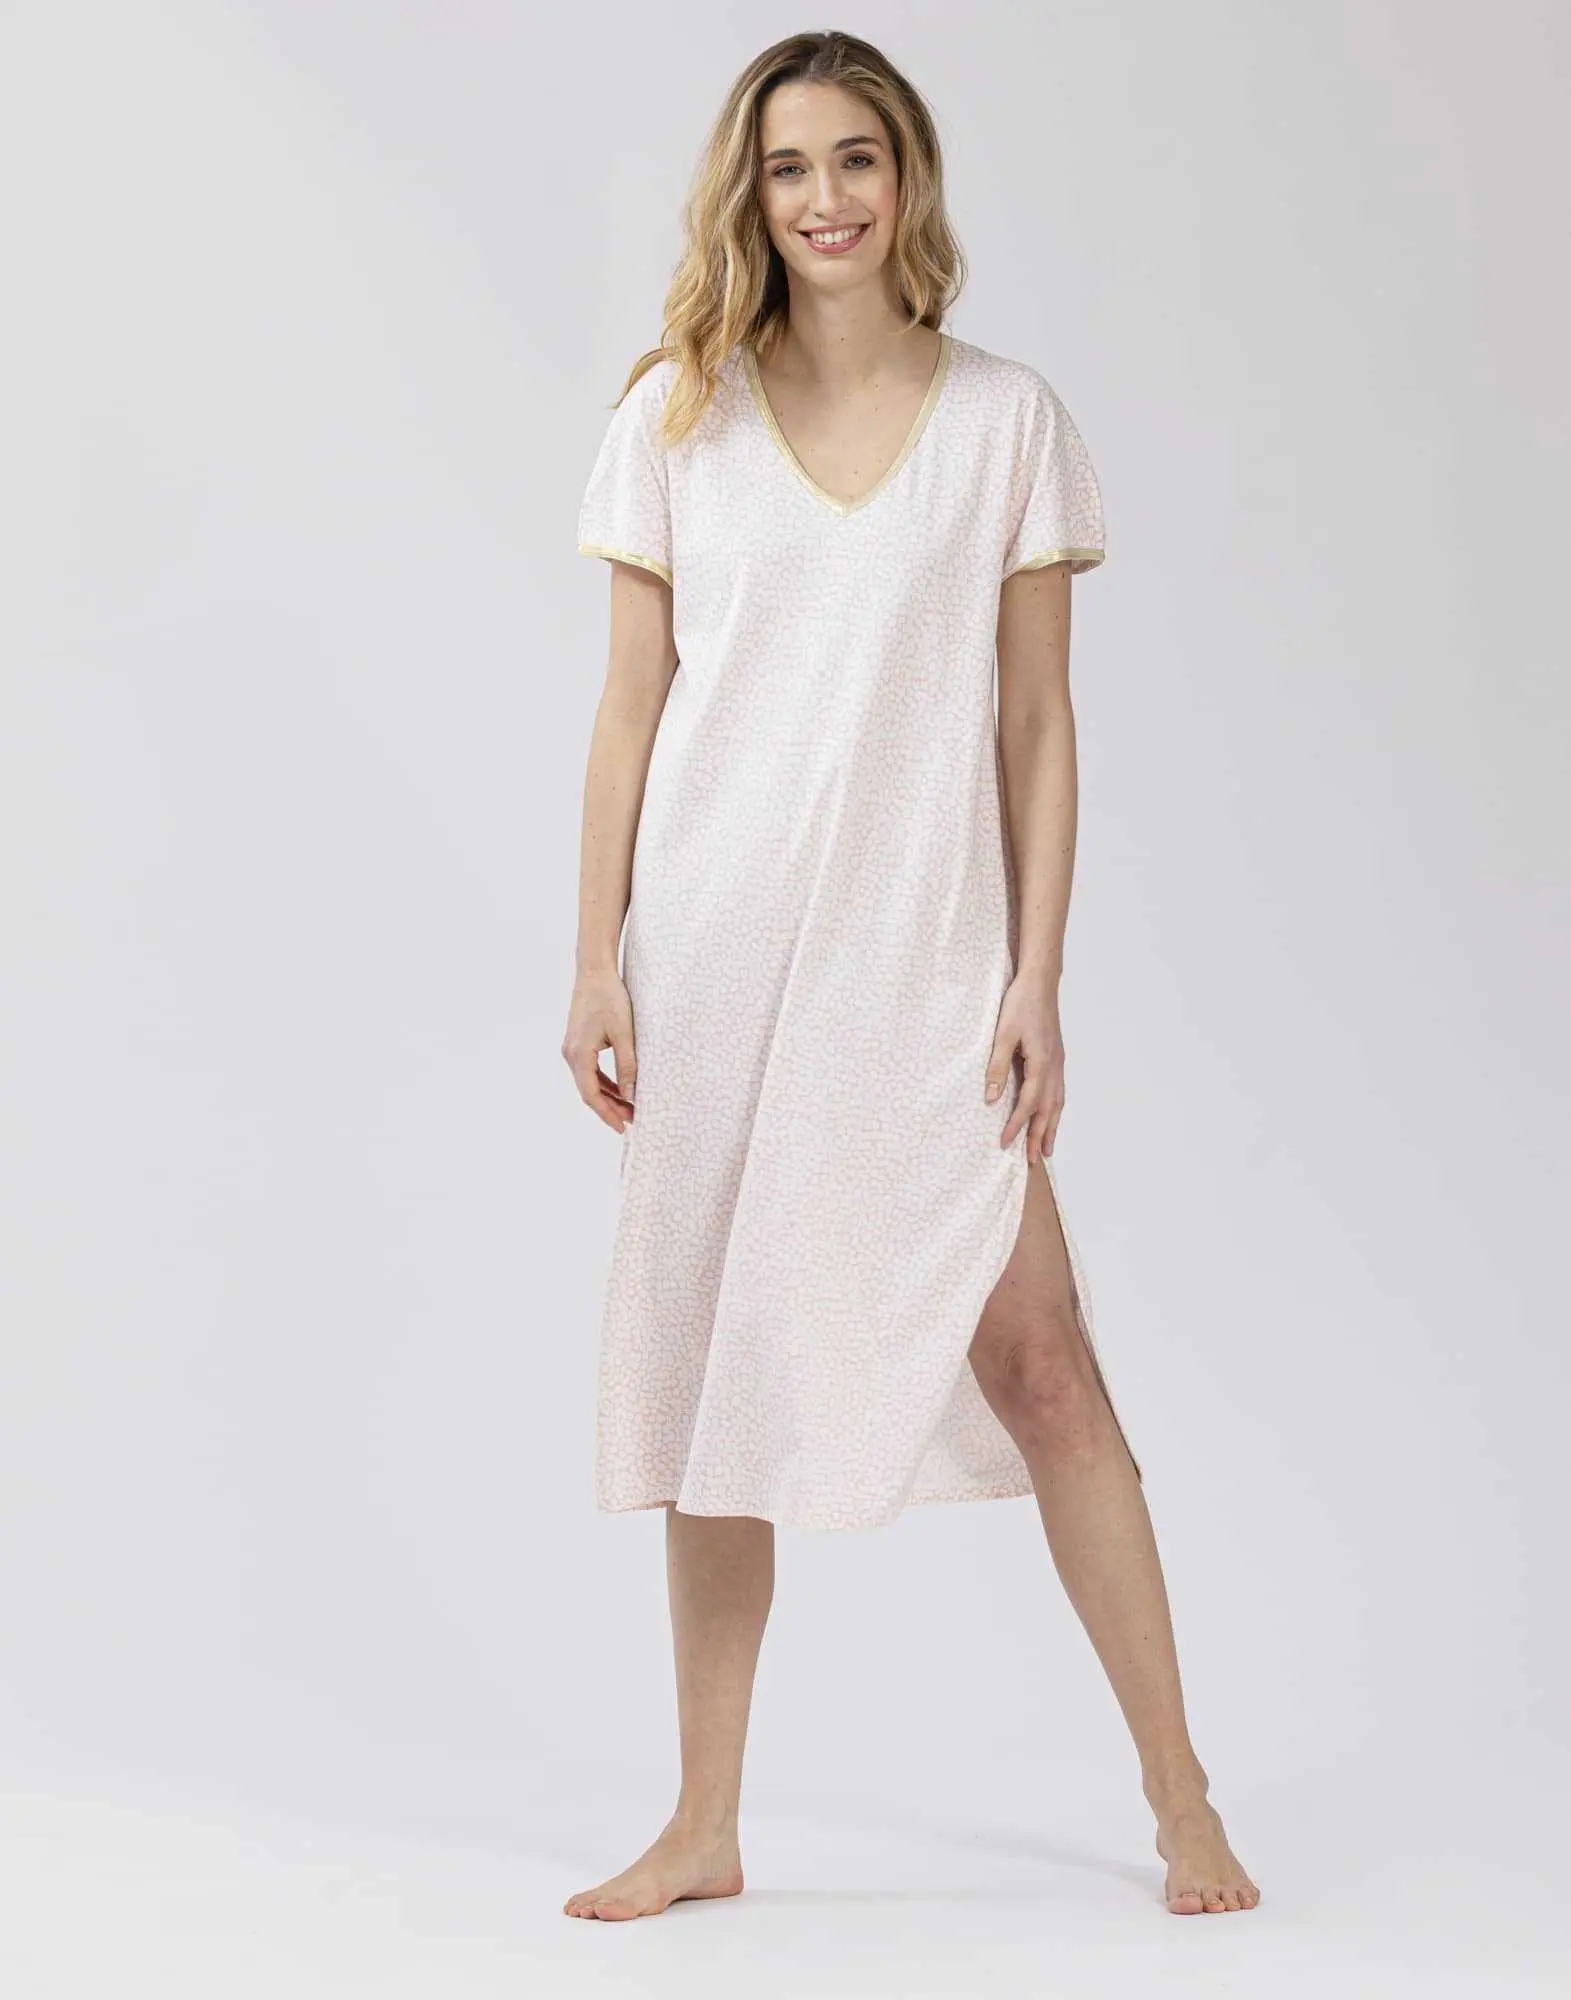 Patterned nightshirt LOVIN'YOU 511 cotton-elastane, in rose-pink and ecru